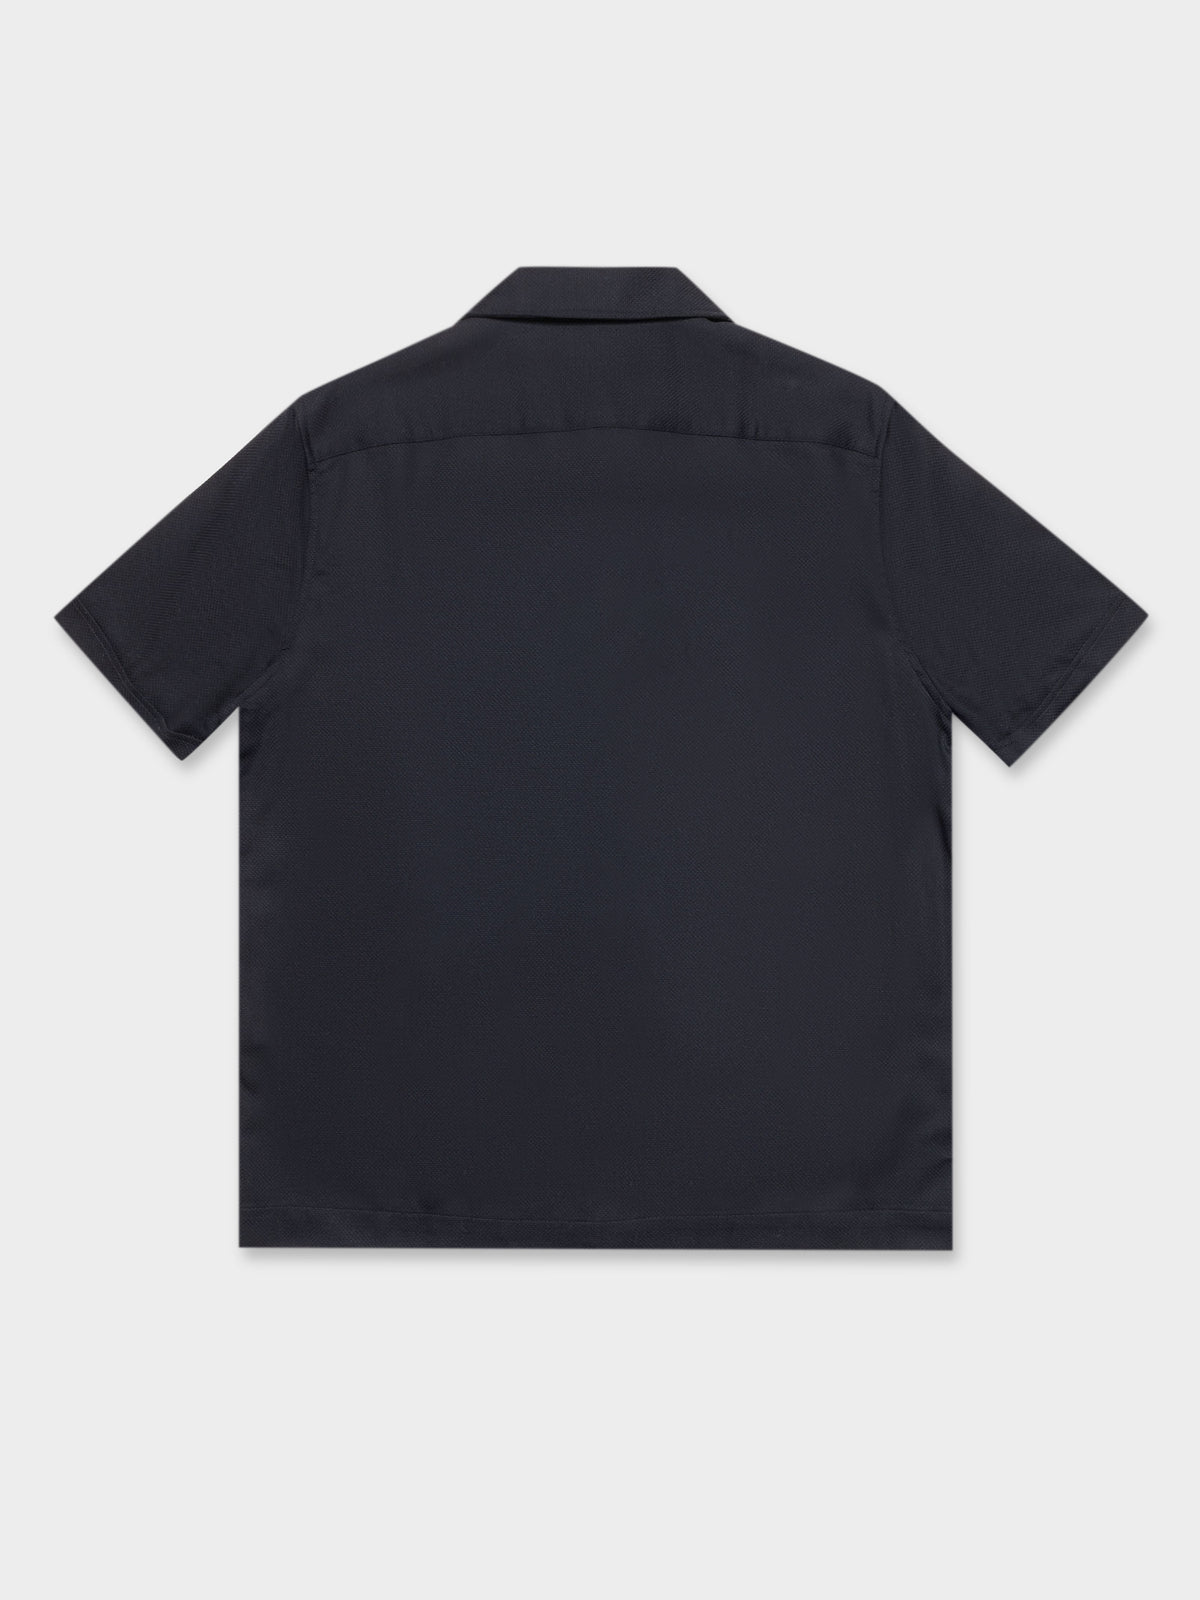 Pique Texture Revere Collar Shirt in Navy